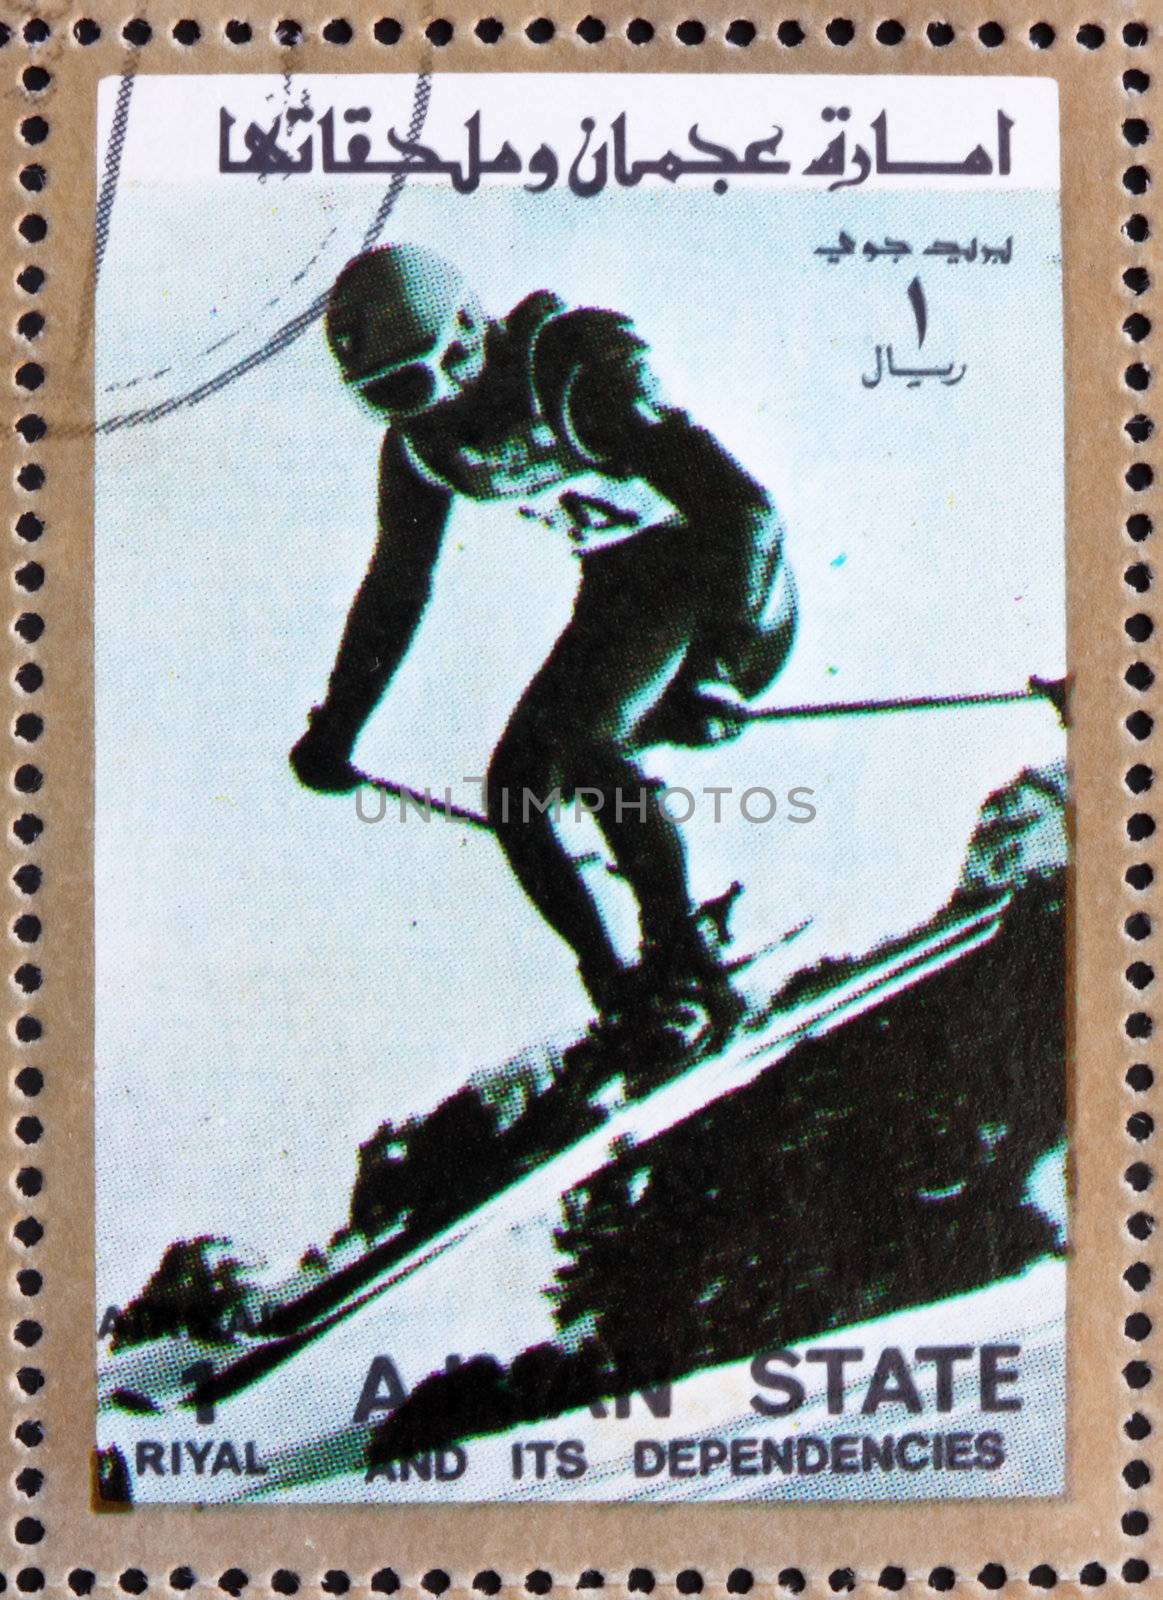 AJMAN - CIRCA 1973: a stamp printed in the Ajman shows Downhill Skiing, Alpine Skiing, Winter Olympics, circa 1973